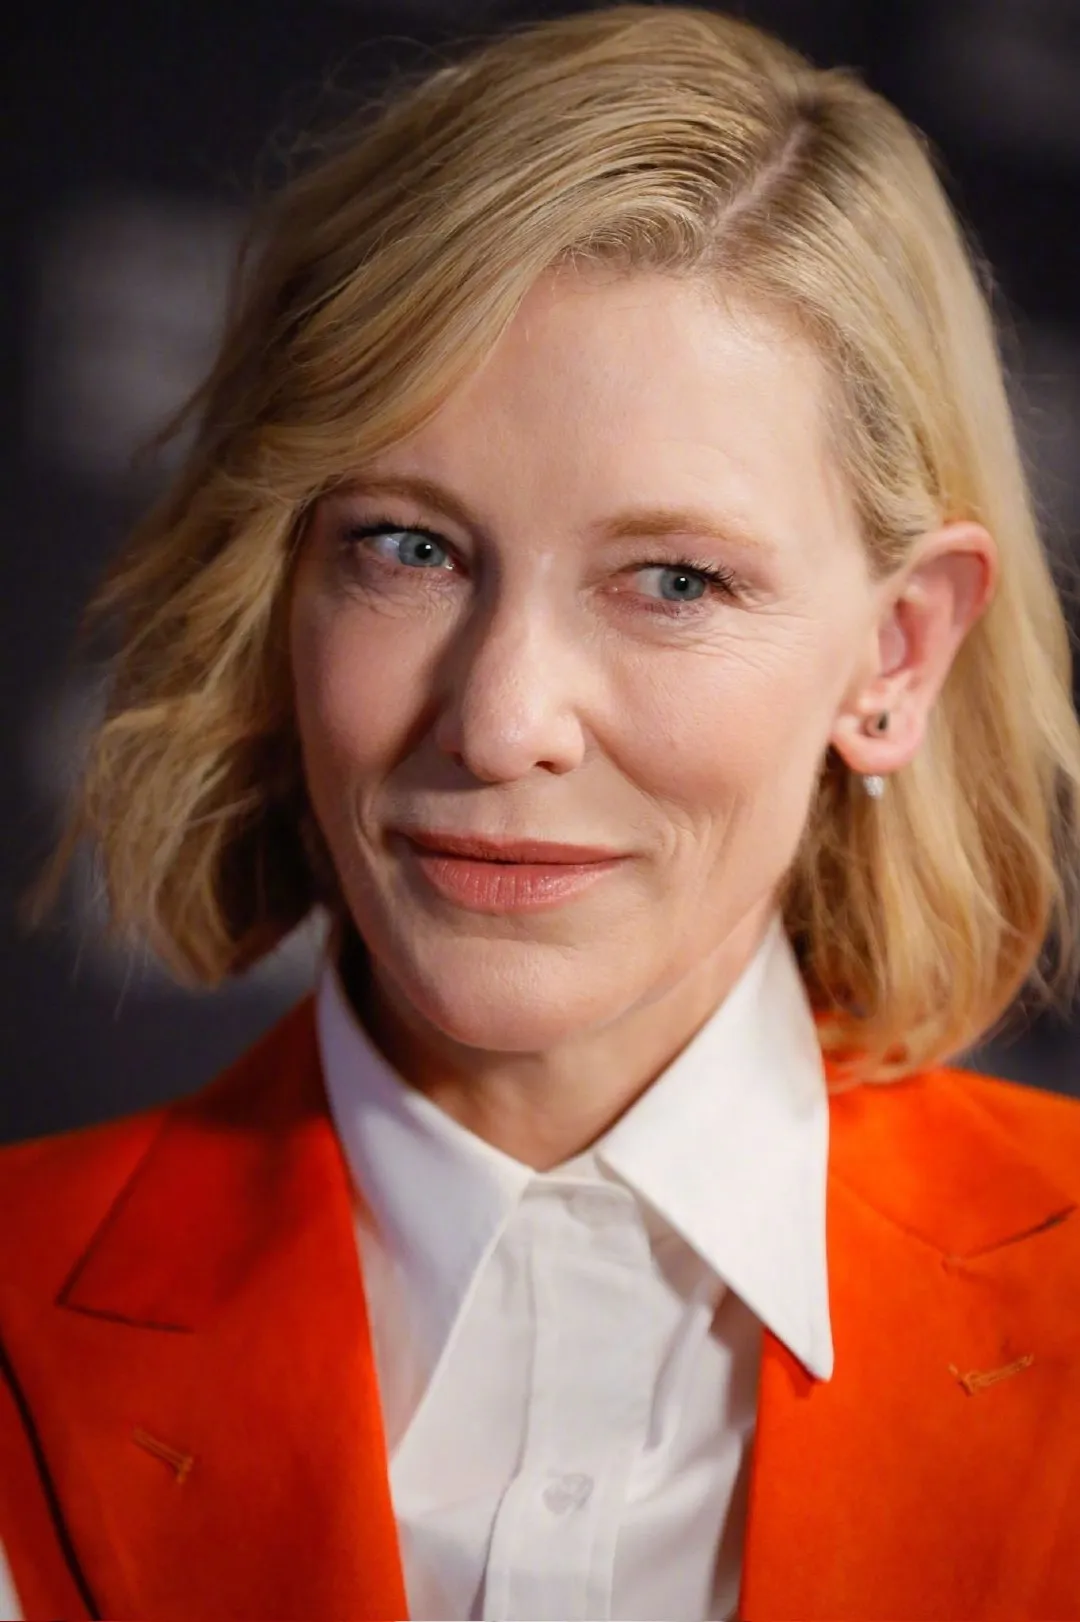 Cate Blanchett attends 'TÁR‎' screening in Sydney | FMV6